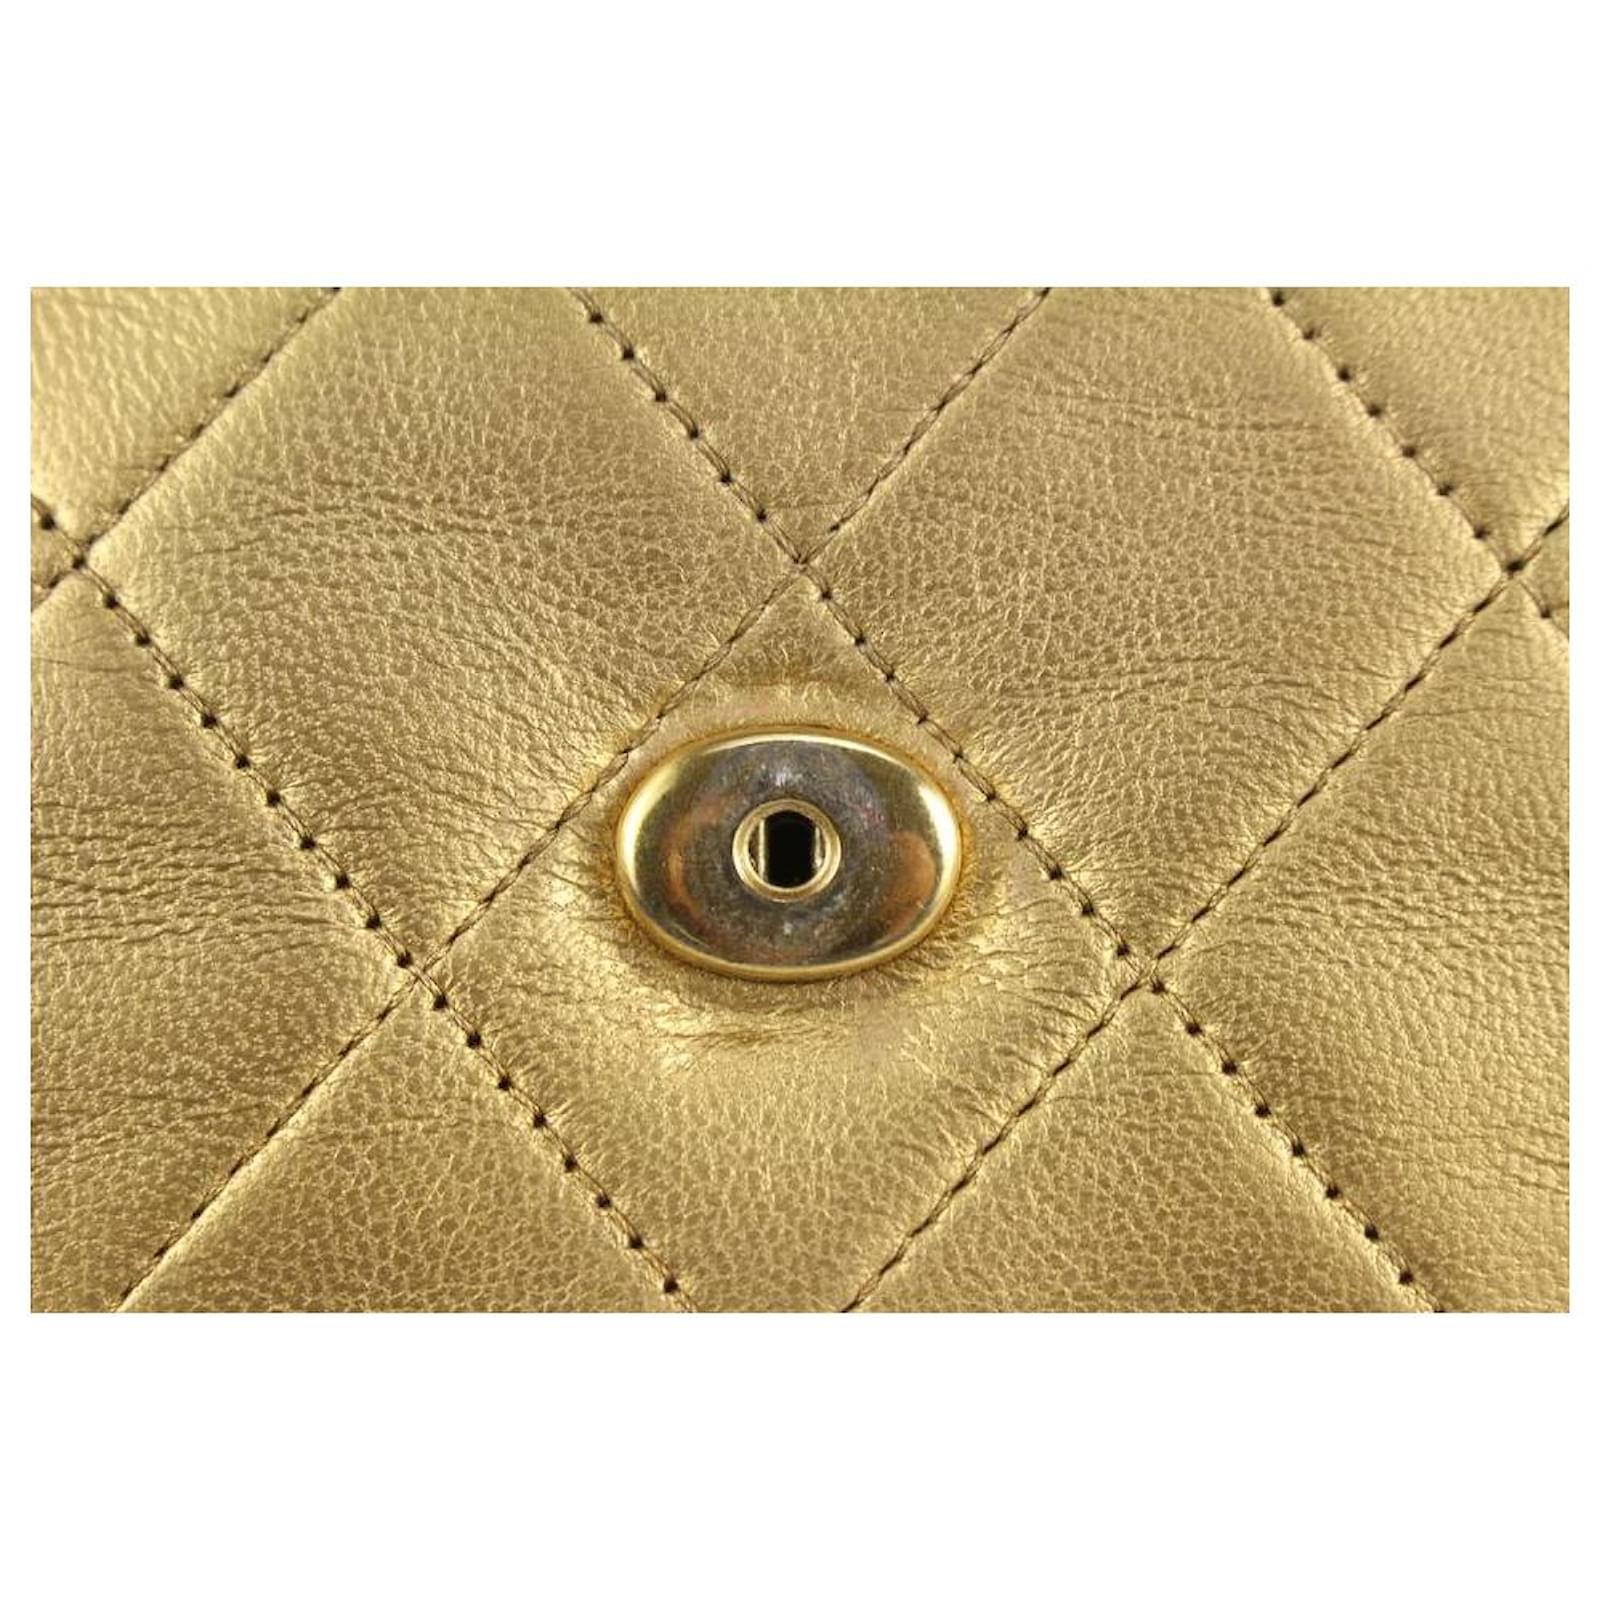 1990's Chanel Gold Metallic Lambskin Vintage Mini Flap Bag at 1stDibs